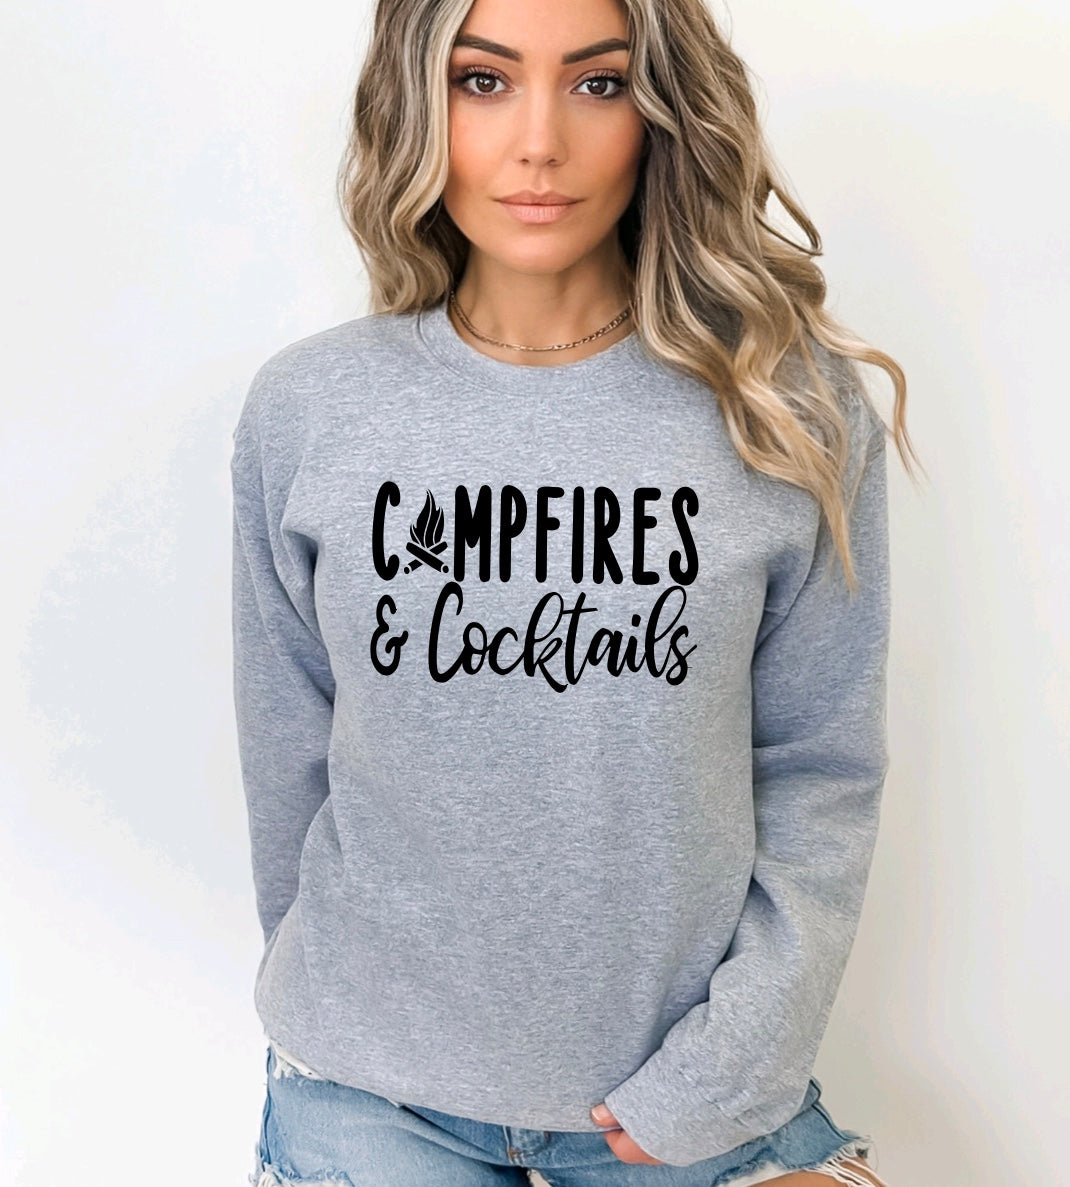 Campfires and cocktails unisex Gildan crewneck sweatshirt in grey